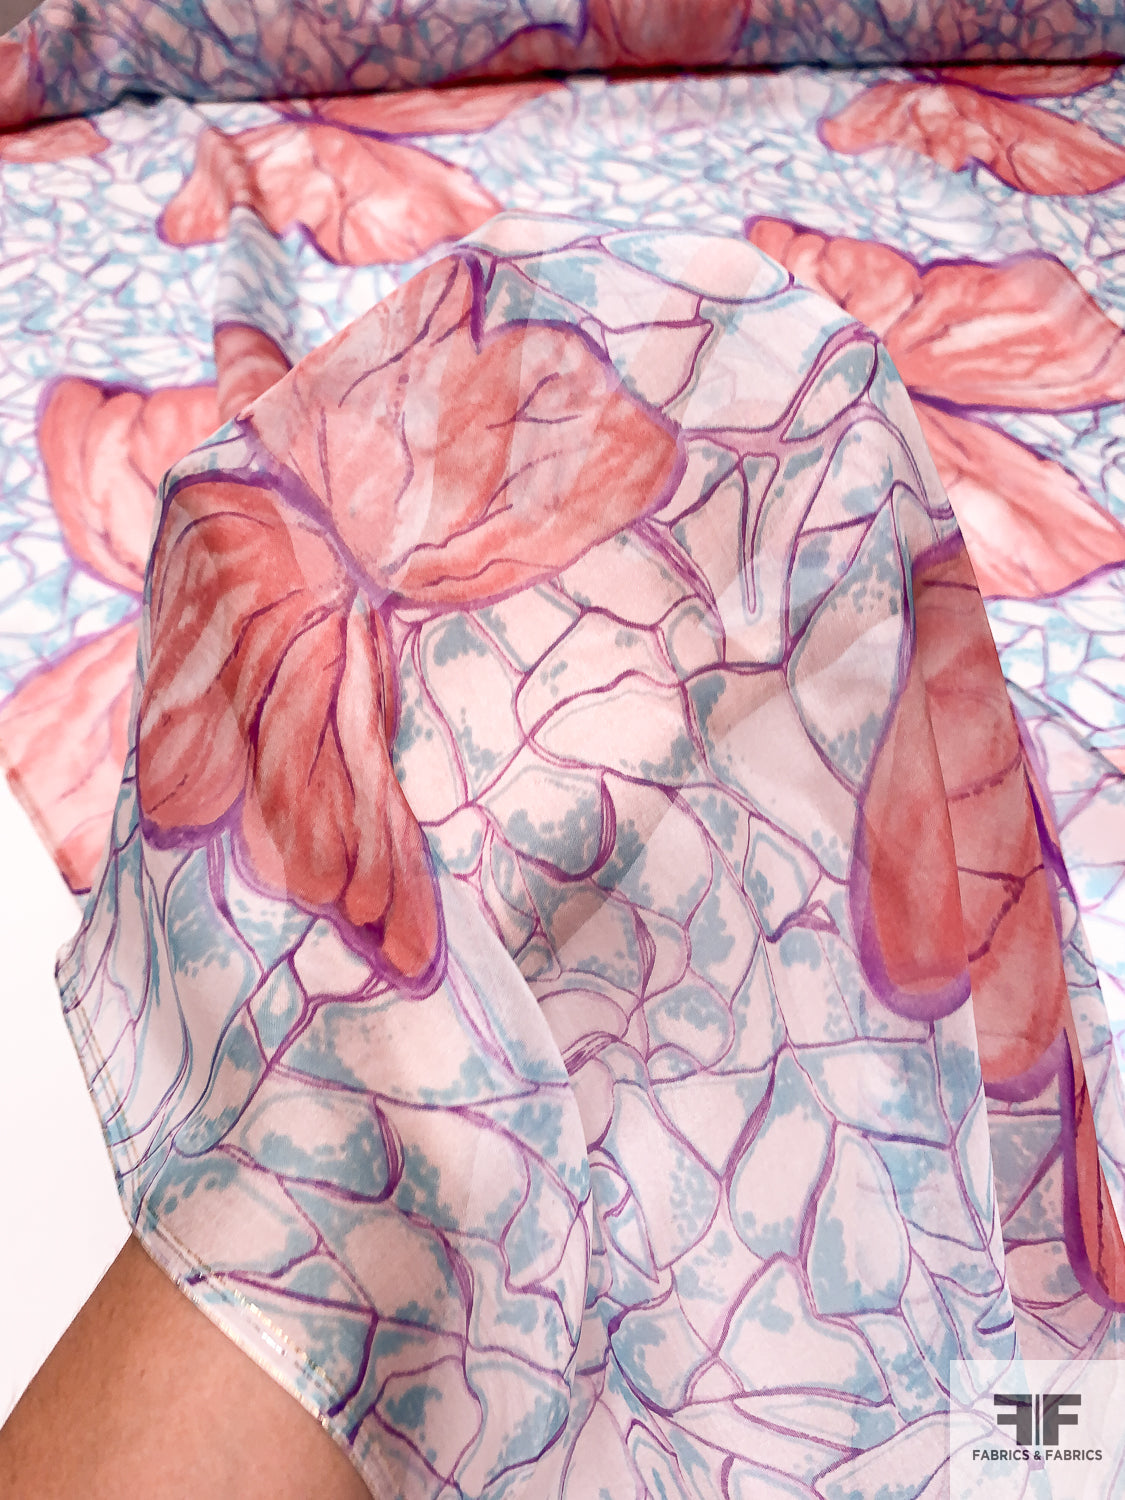 Bold Butterfly Printed Silk Chiffon - Peachy Coral / Purple / Aqua Blue